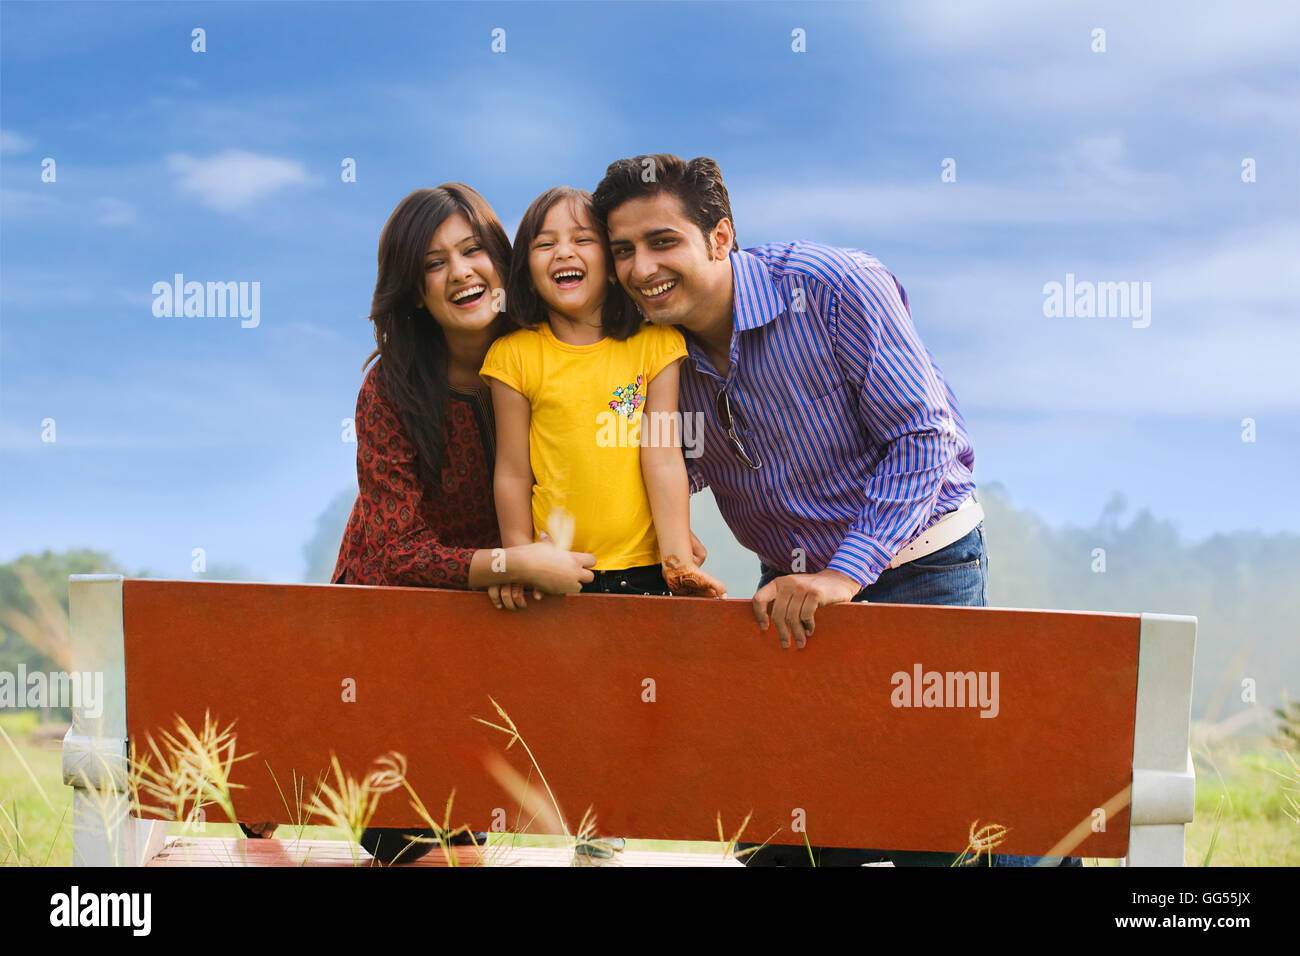 Family posing Stock Photo